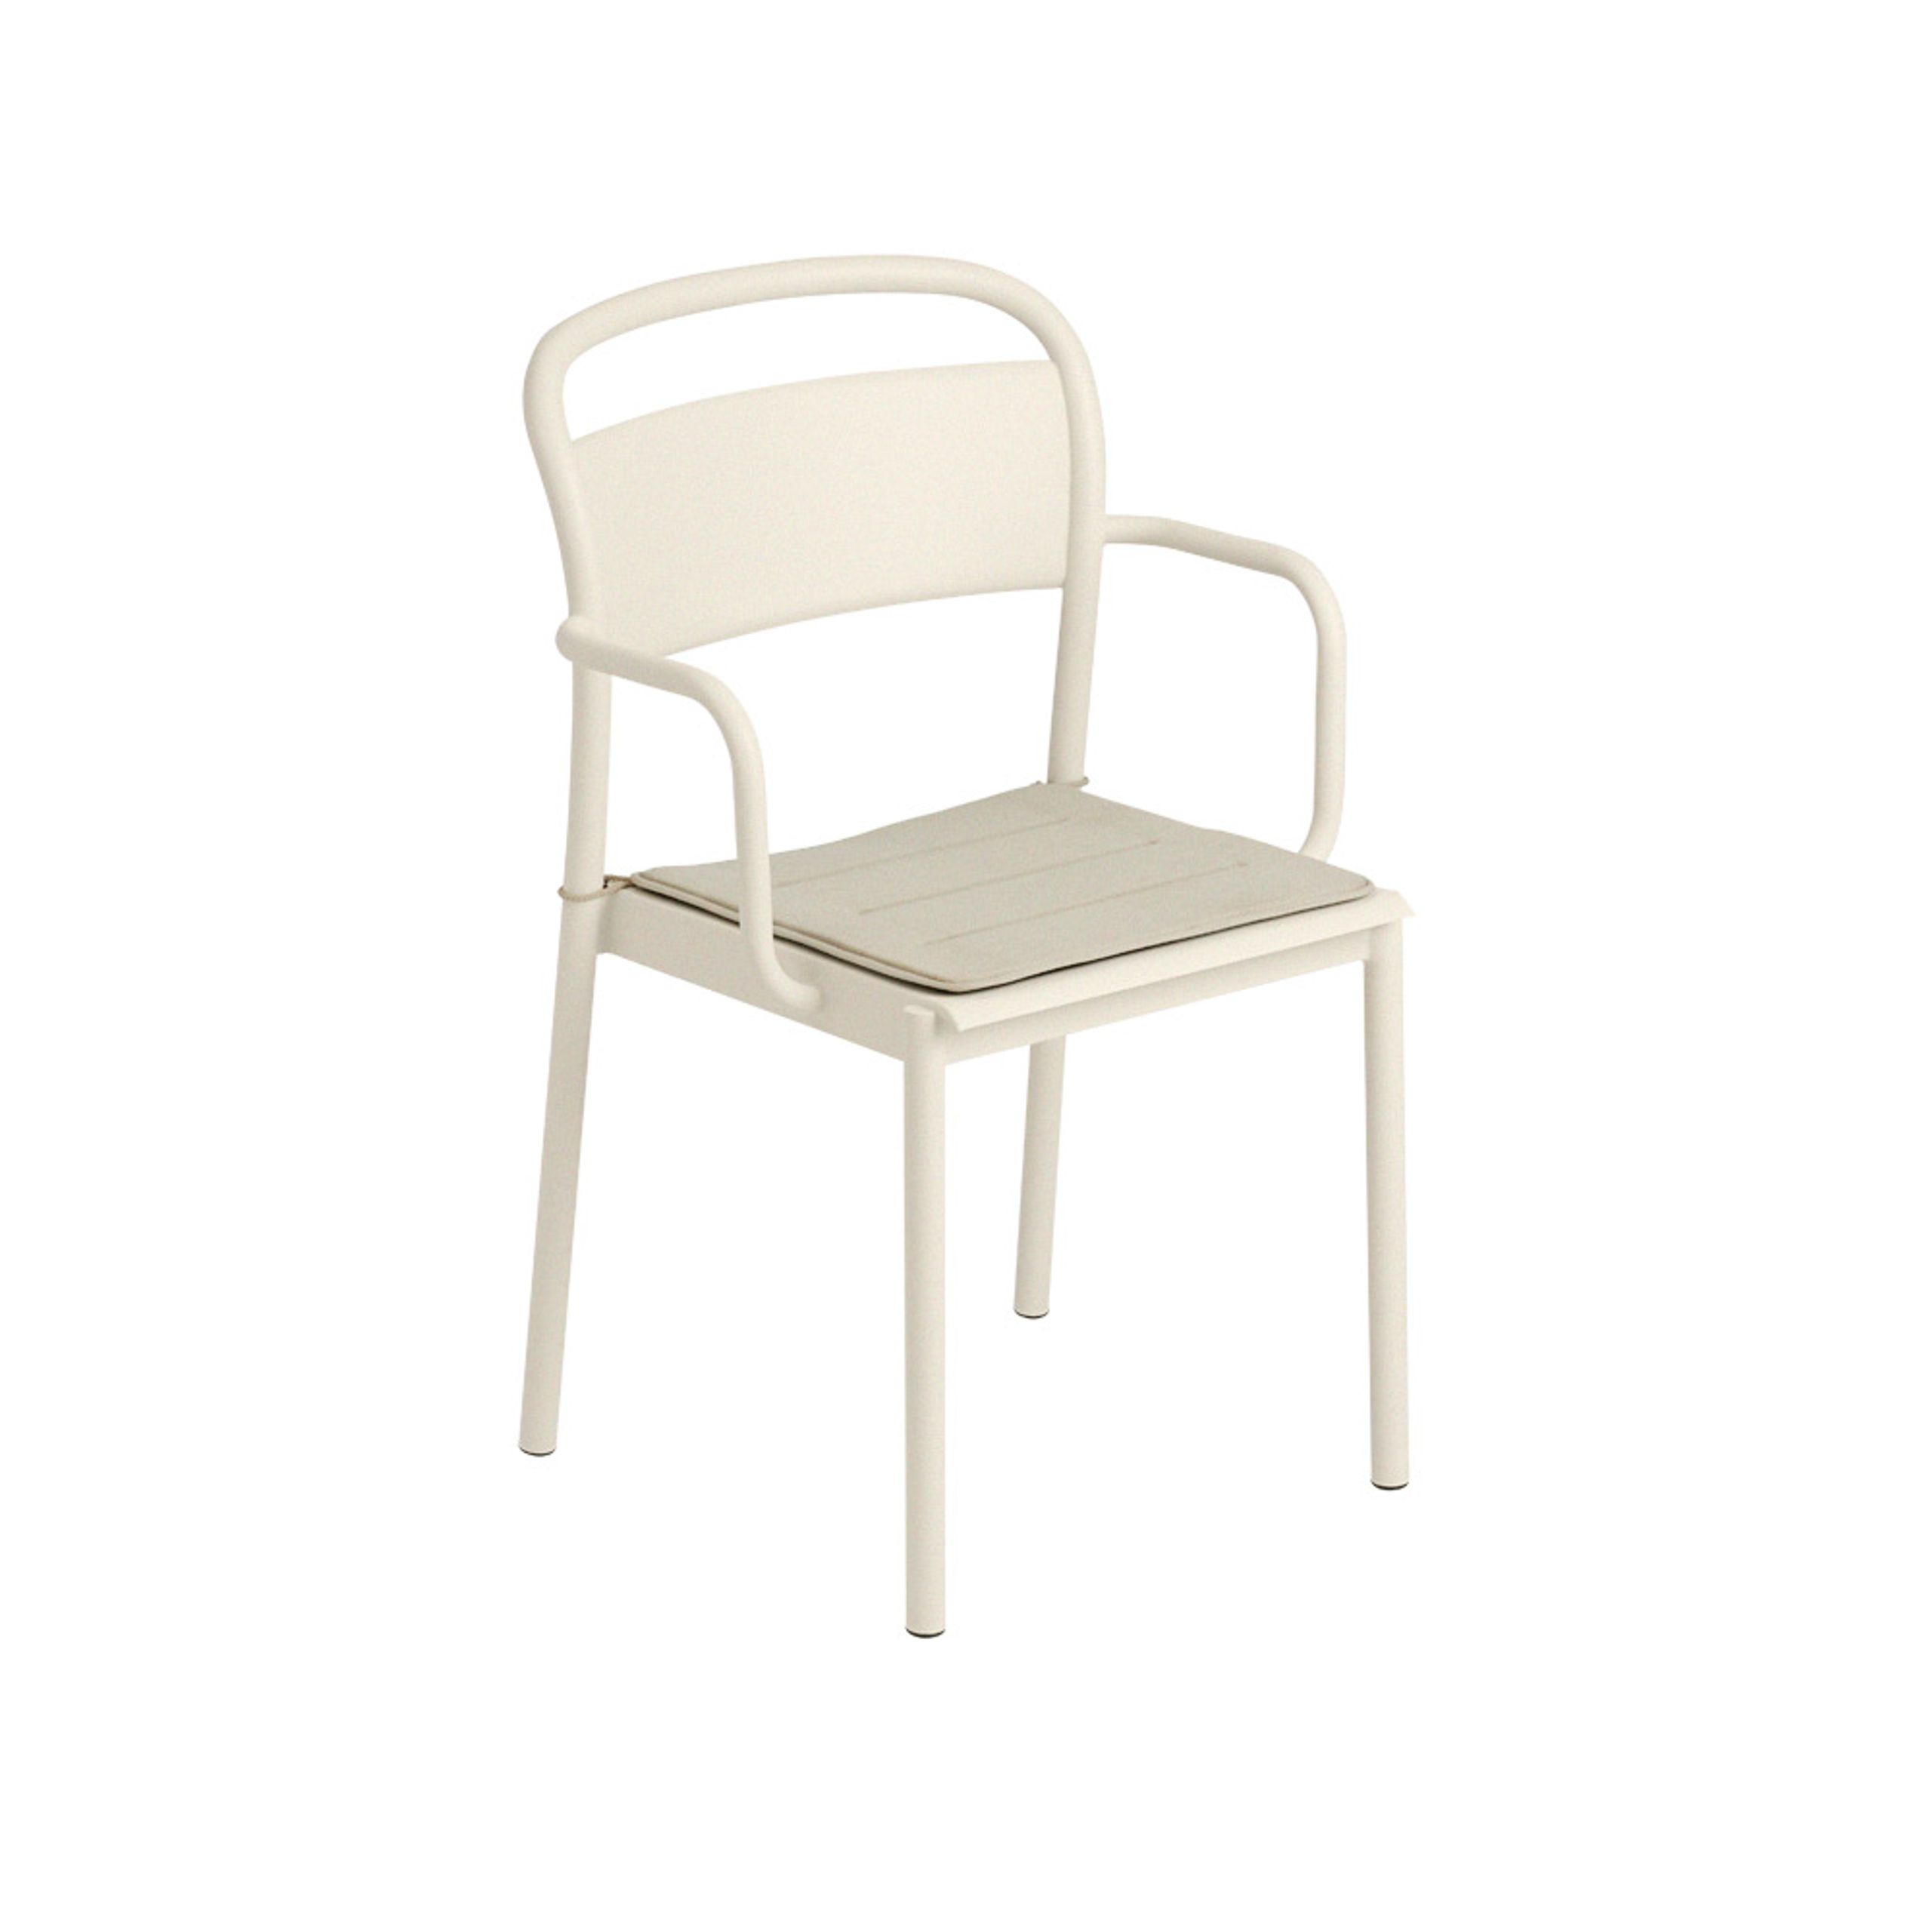 Muuto - Almofada - Linear Steel Chair Seat Pad - Grey